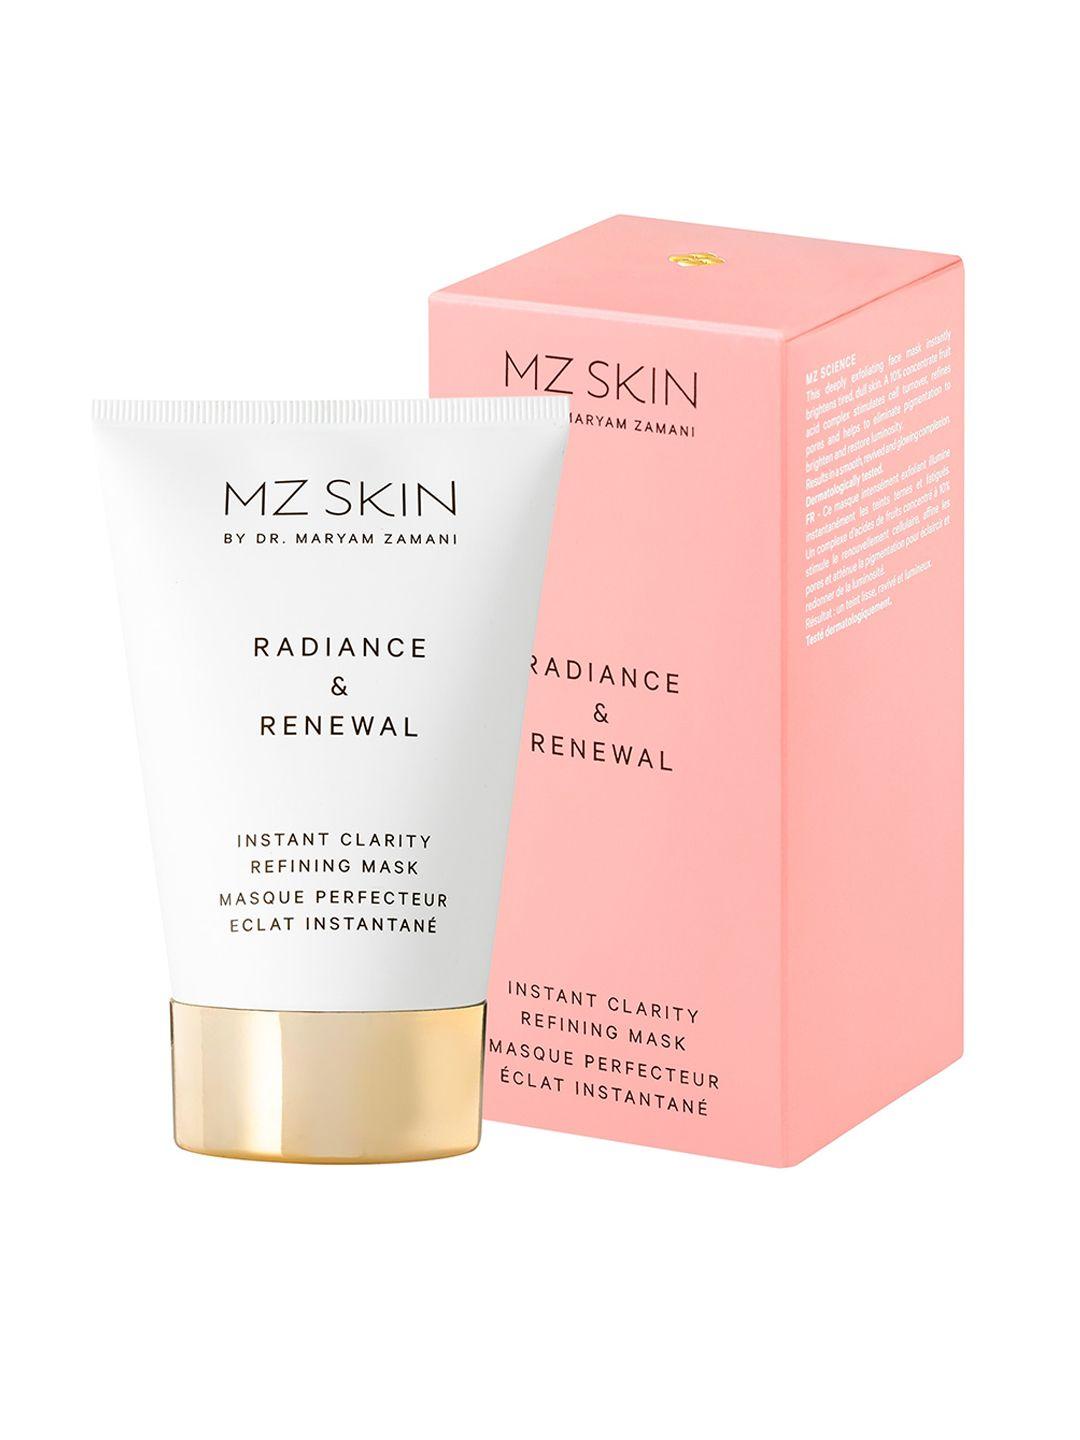 mz skin radiance & renewal aha instant clarity refining mask - 100ml